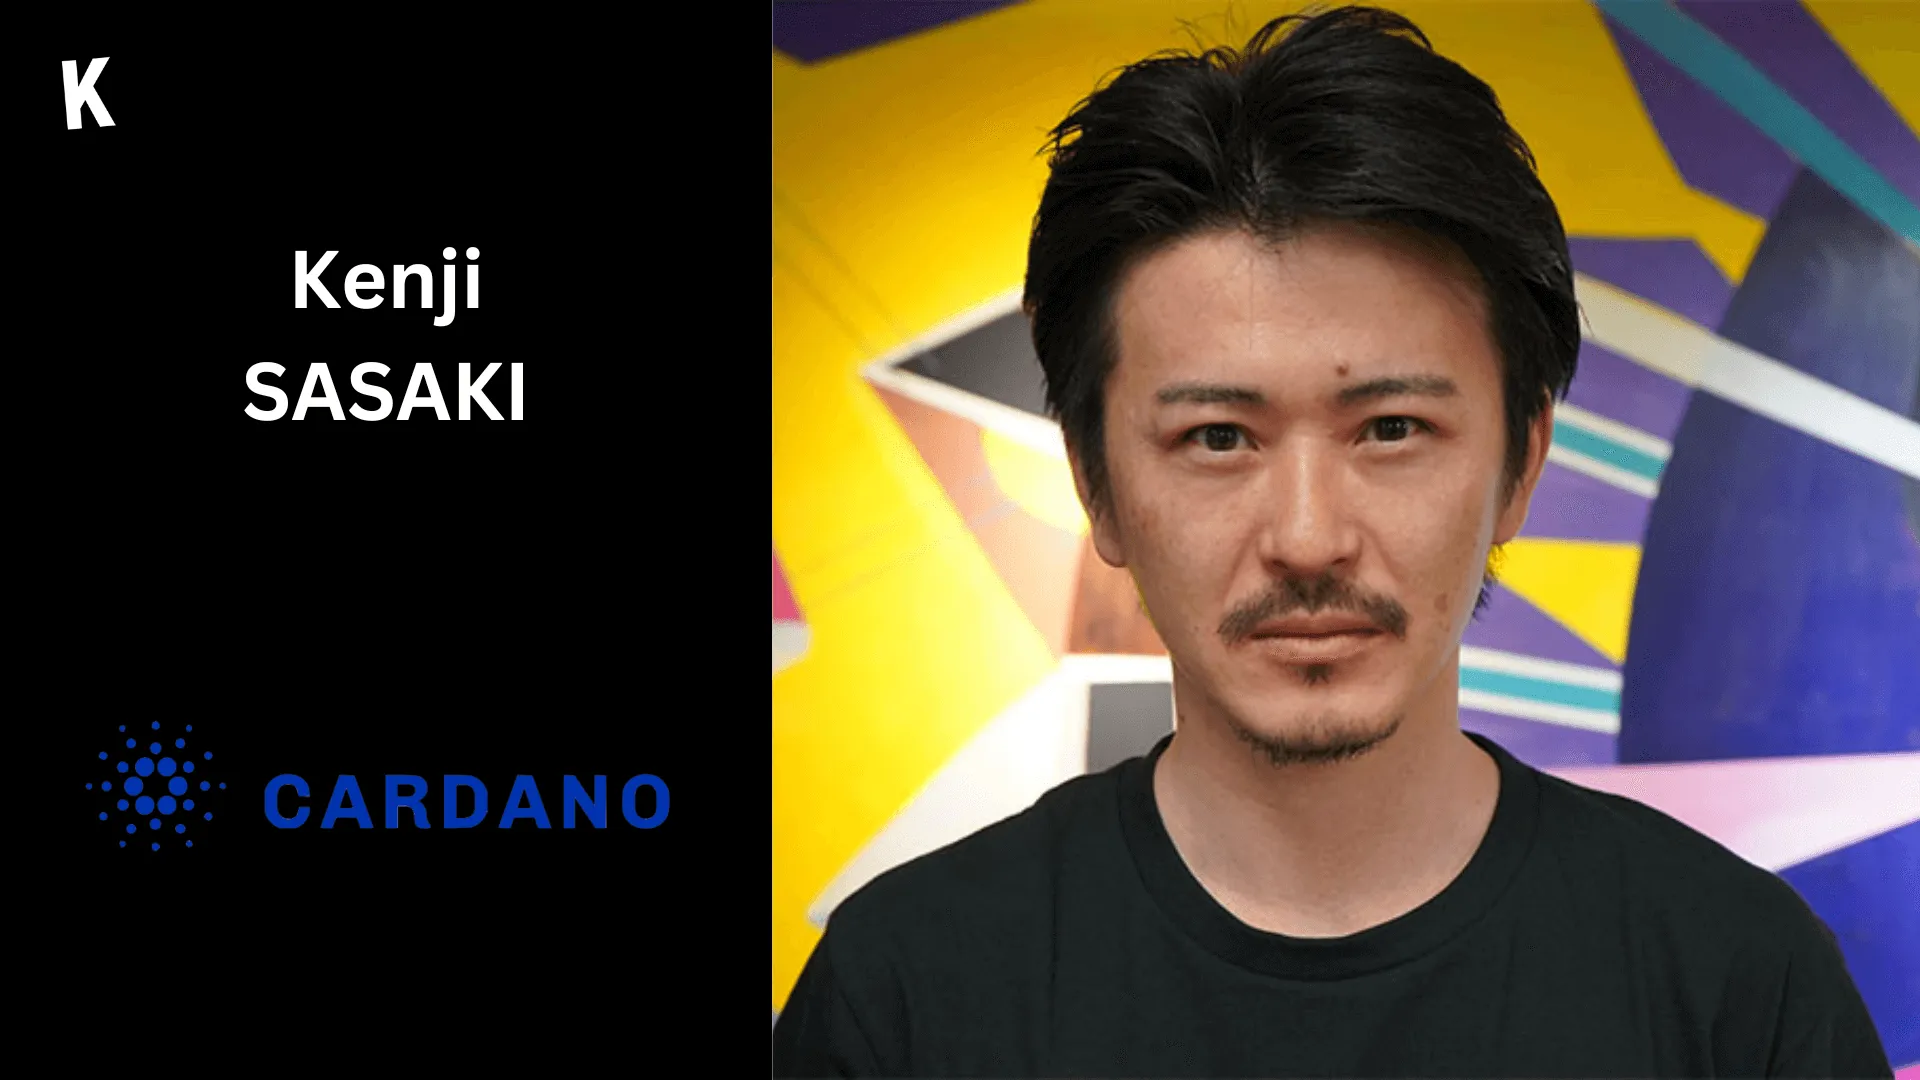 Kenji Sasaki Portrait and Cardano logo